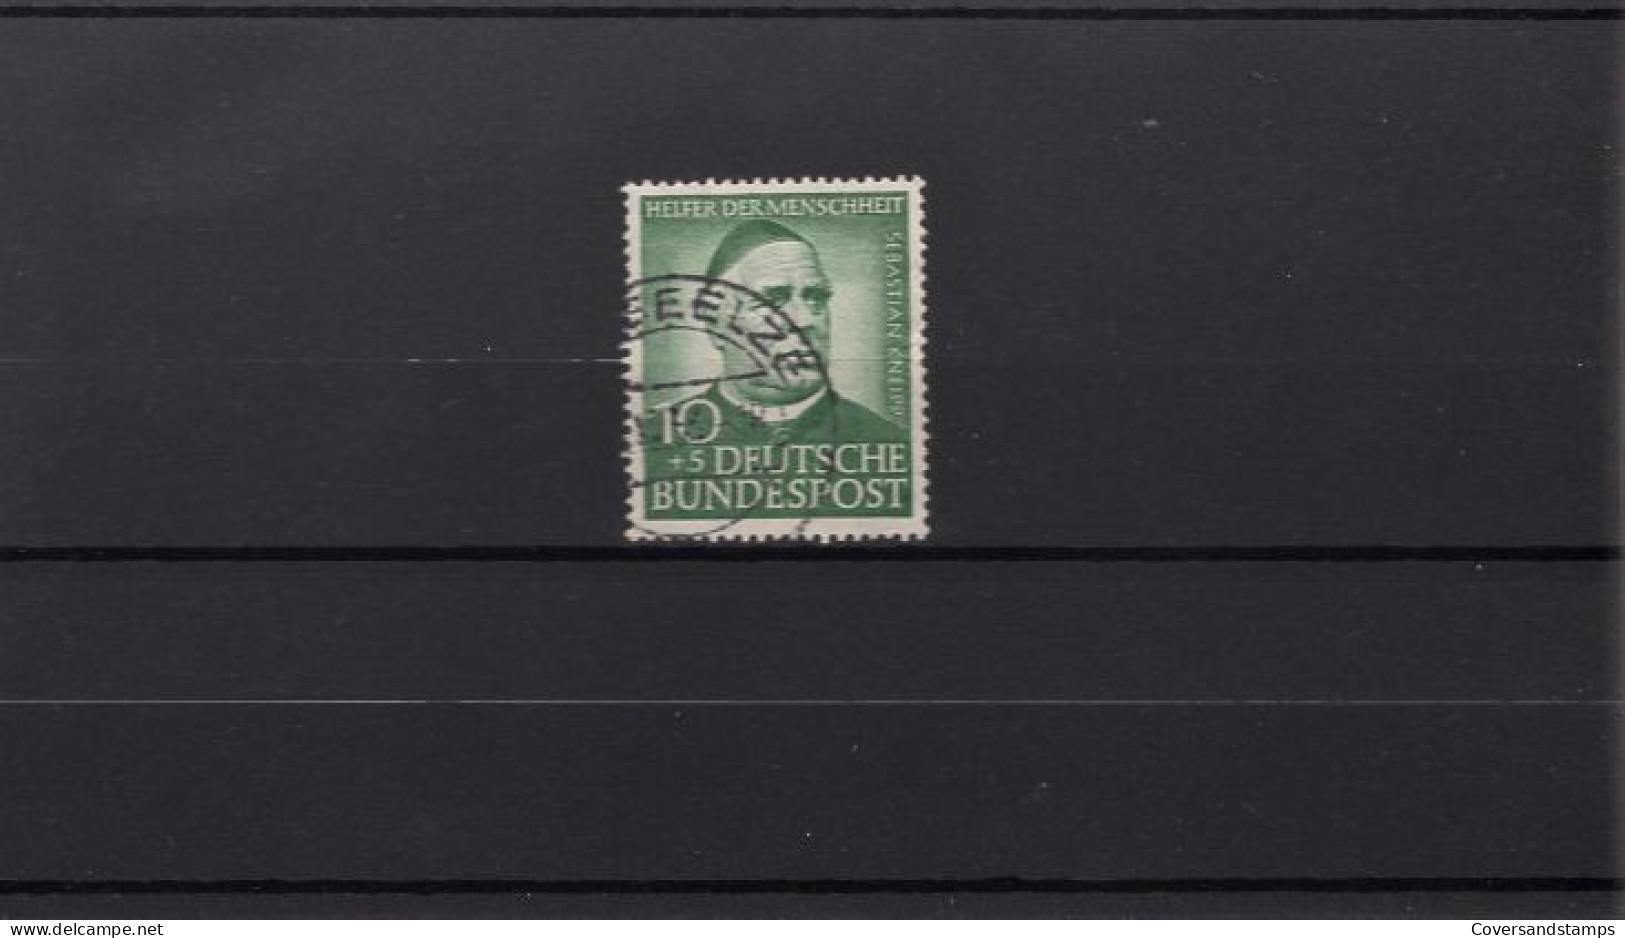   Deutsche Bundespost - Mi 174  Gestempeld / Oblitéré / Cancelled - Used Stamps